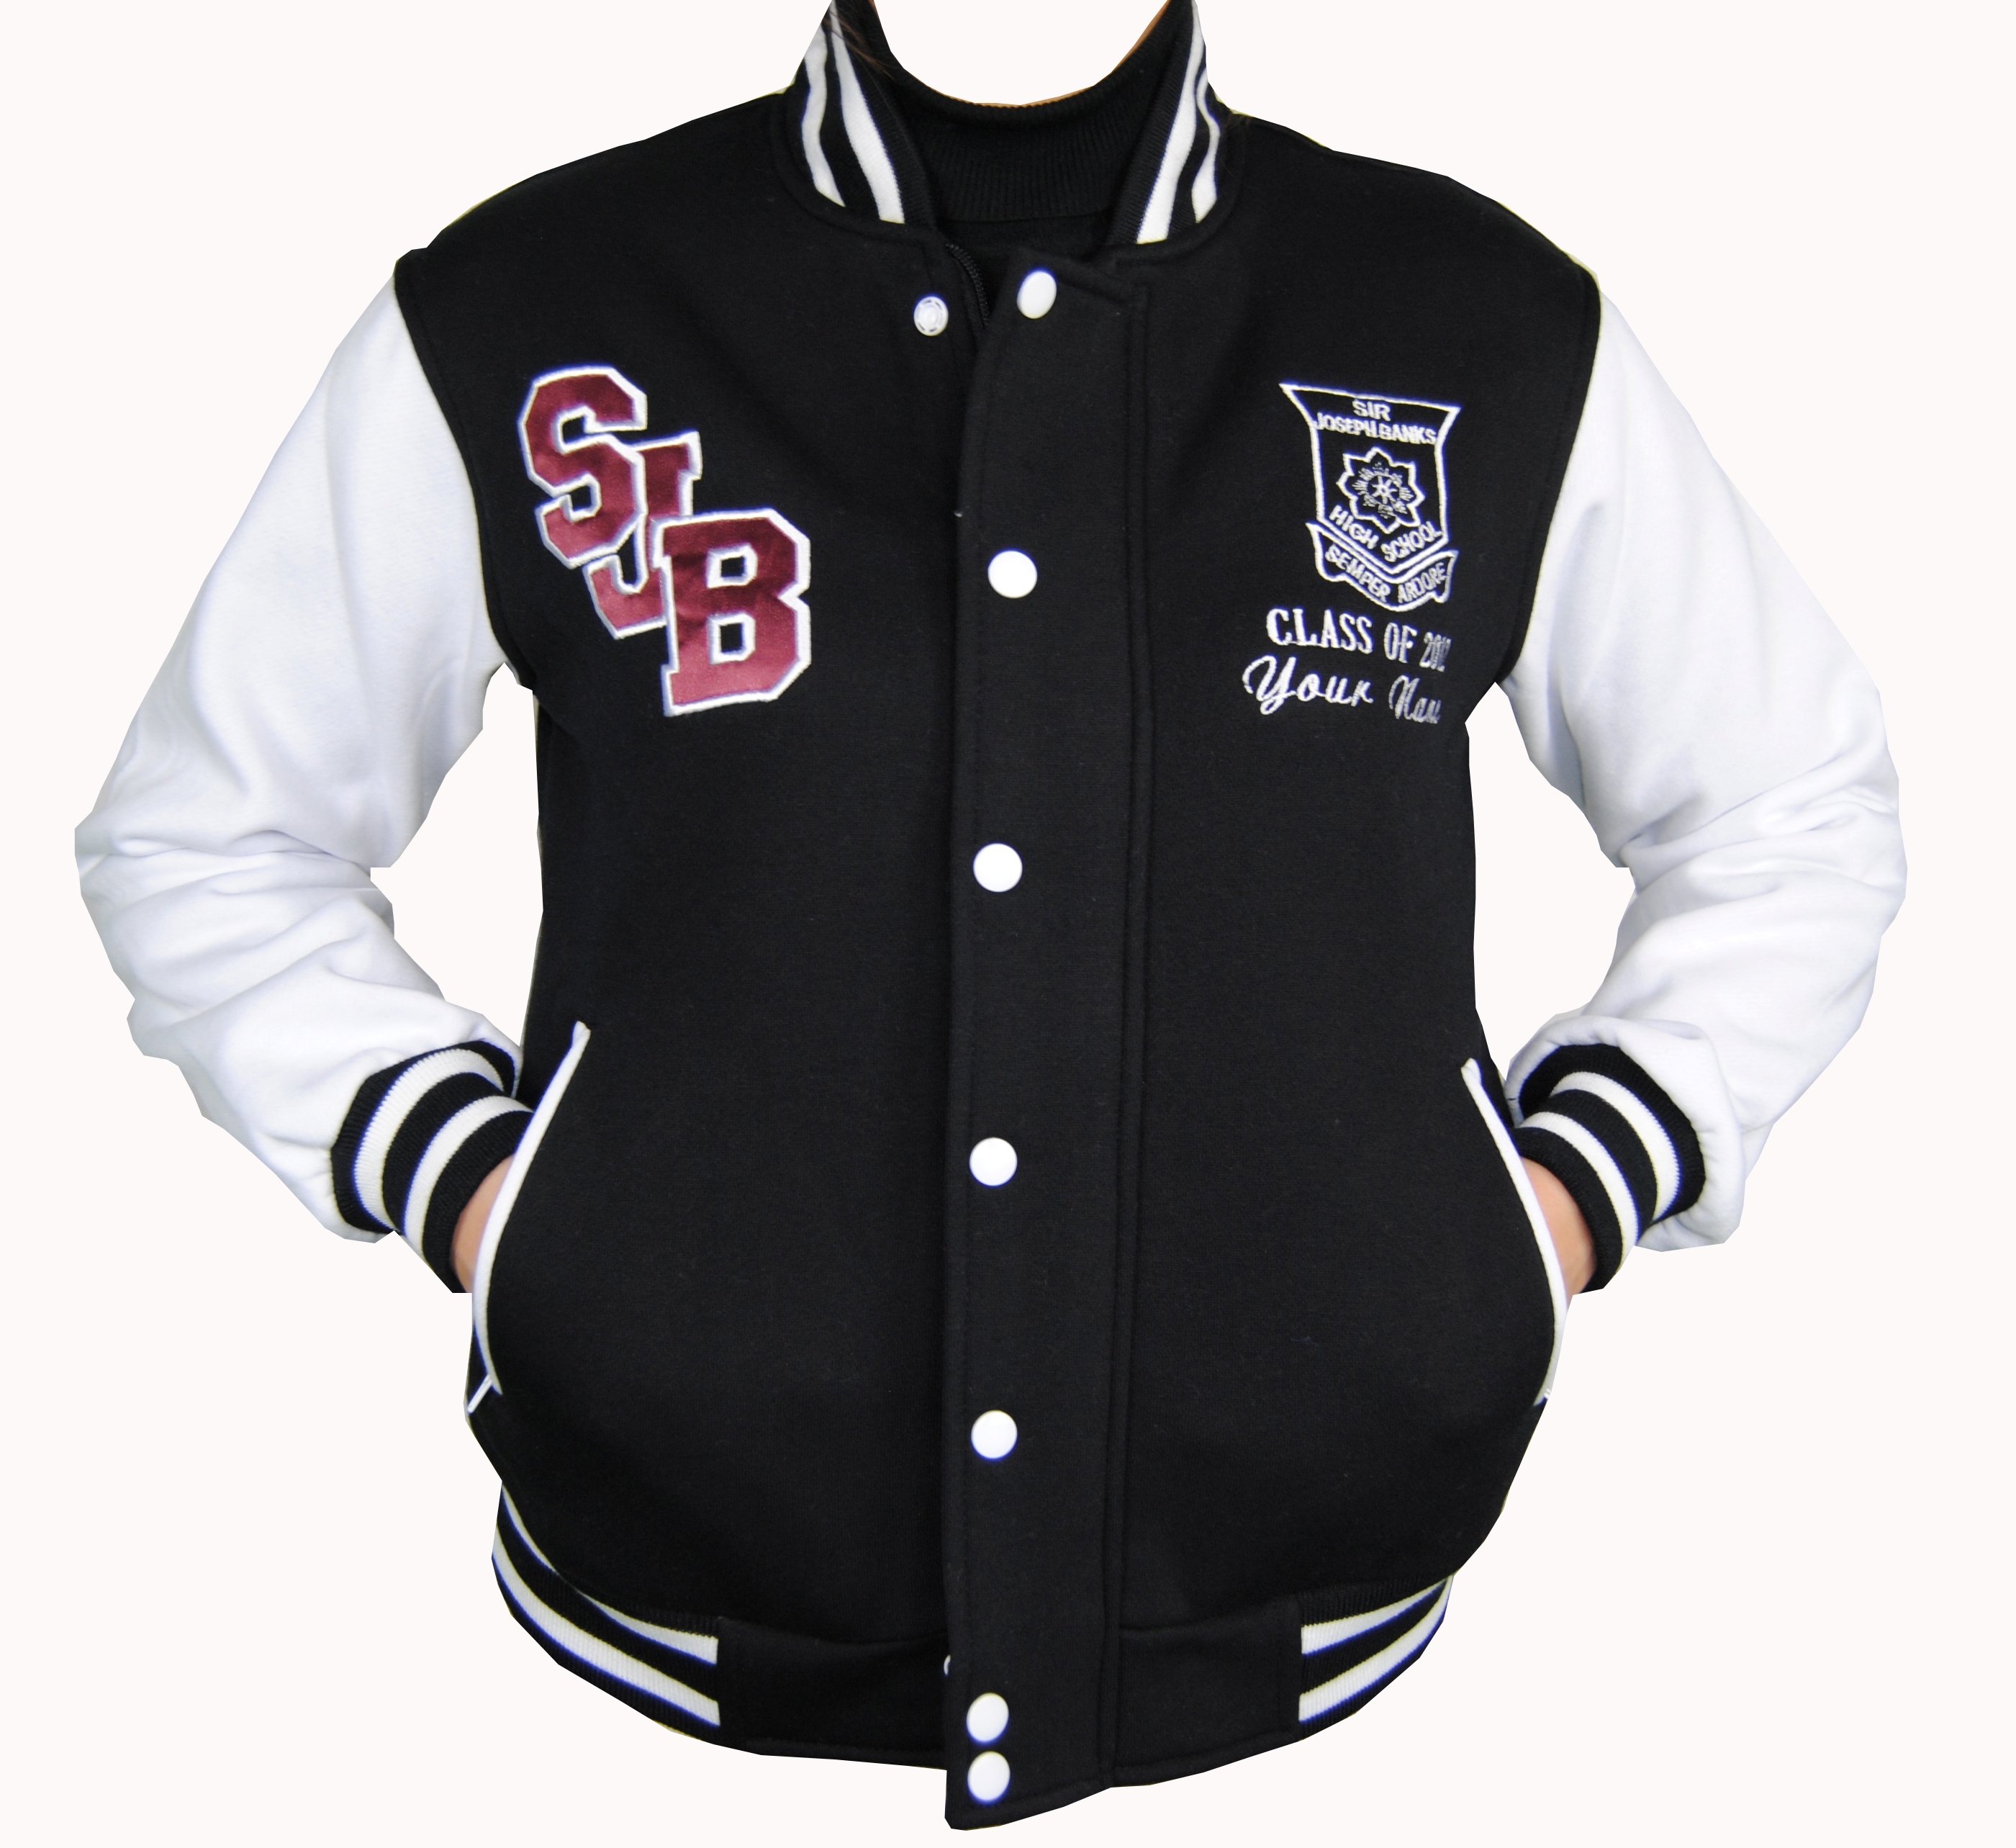 Бомбер mere. Куртка Varsity Jacket бейсбольная. Бейсбольная куртка Langzi Cheng. Russell Athletic бейсбольная куртка. Куртка Varsity Jacket бейсбольная Узбекистан.